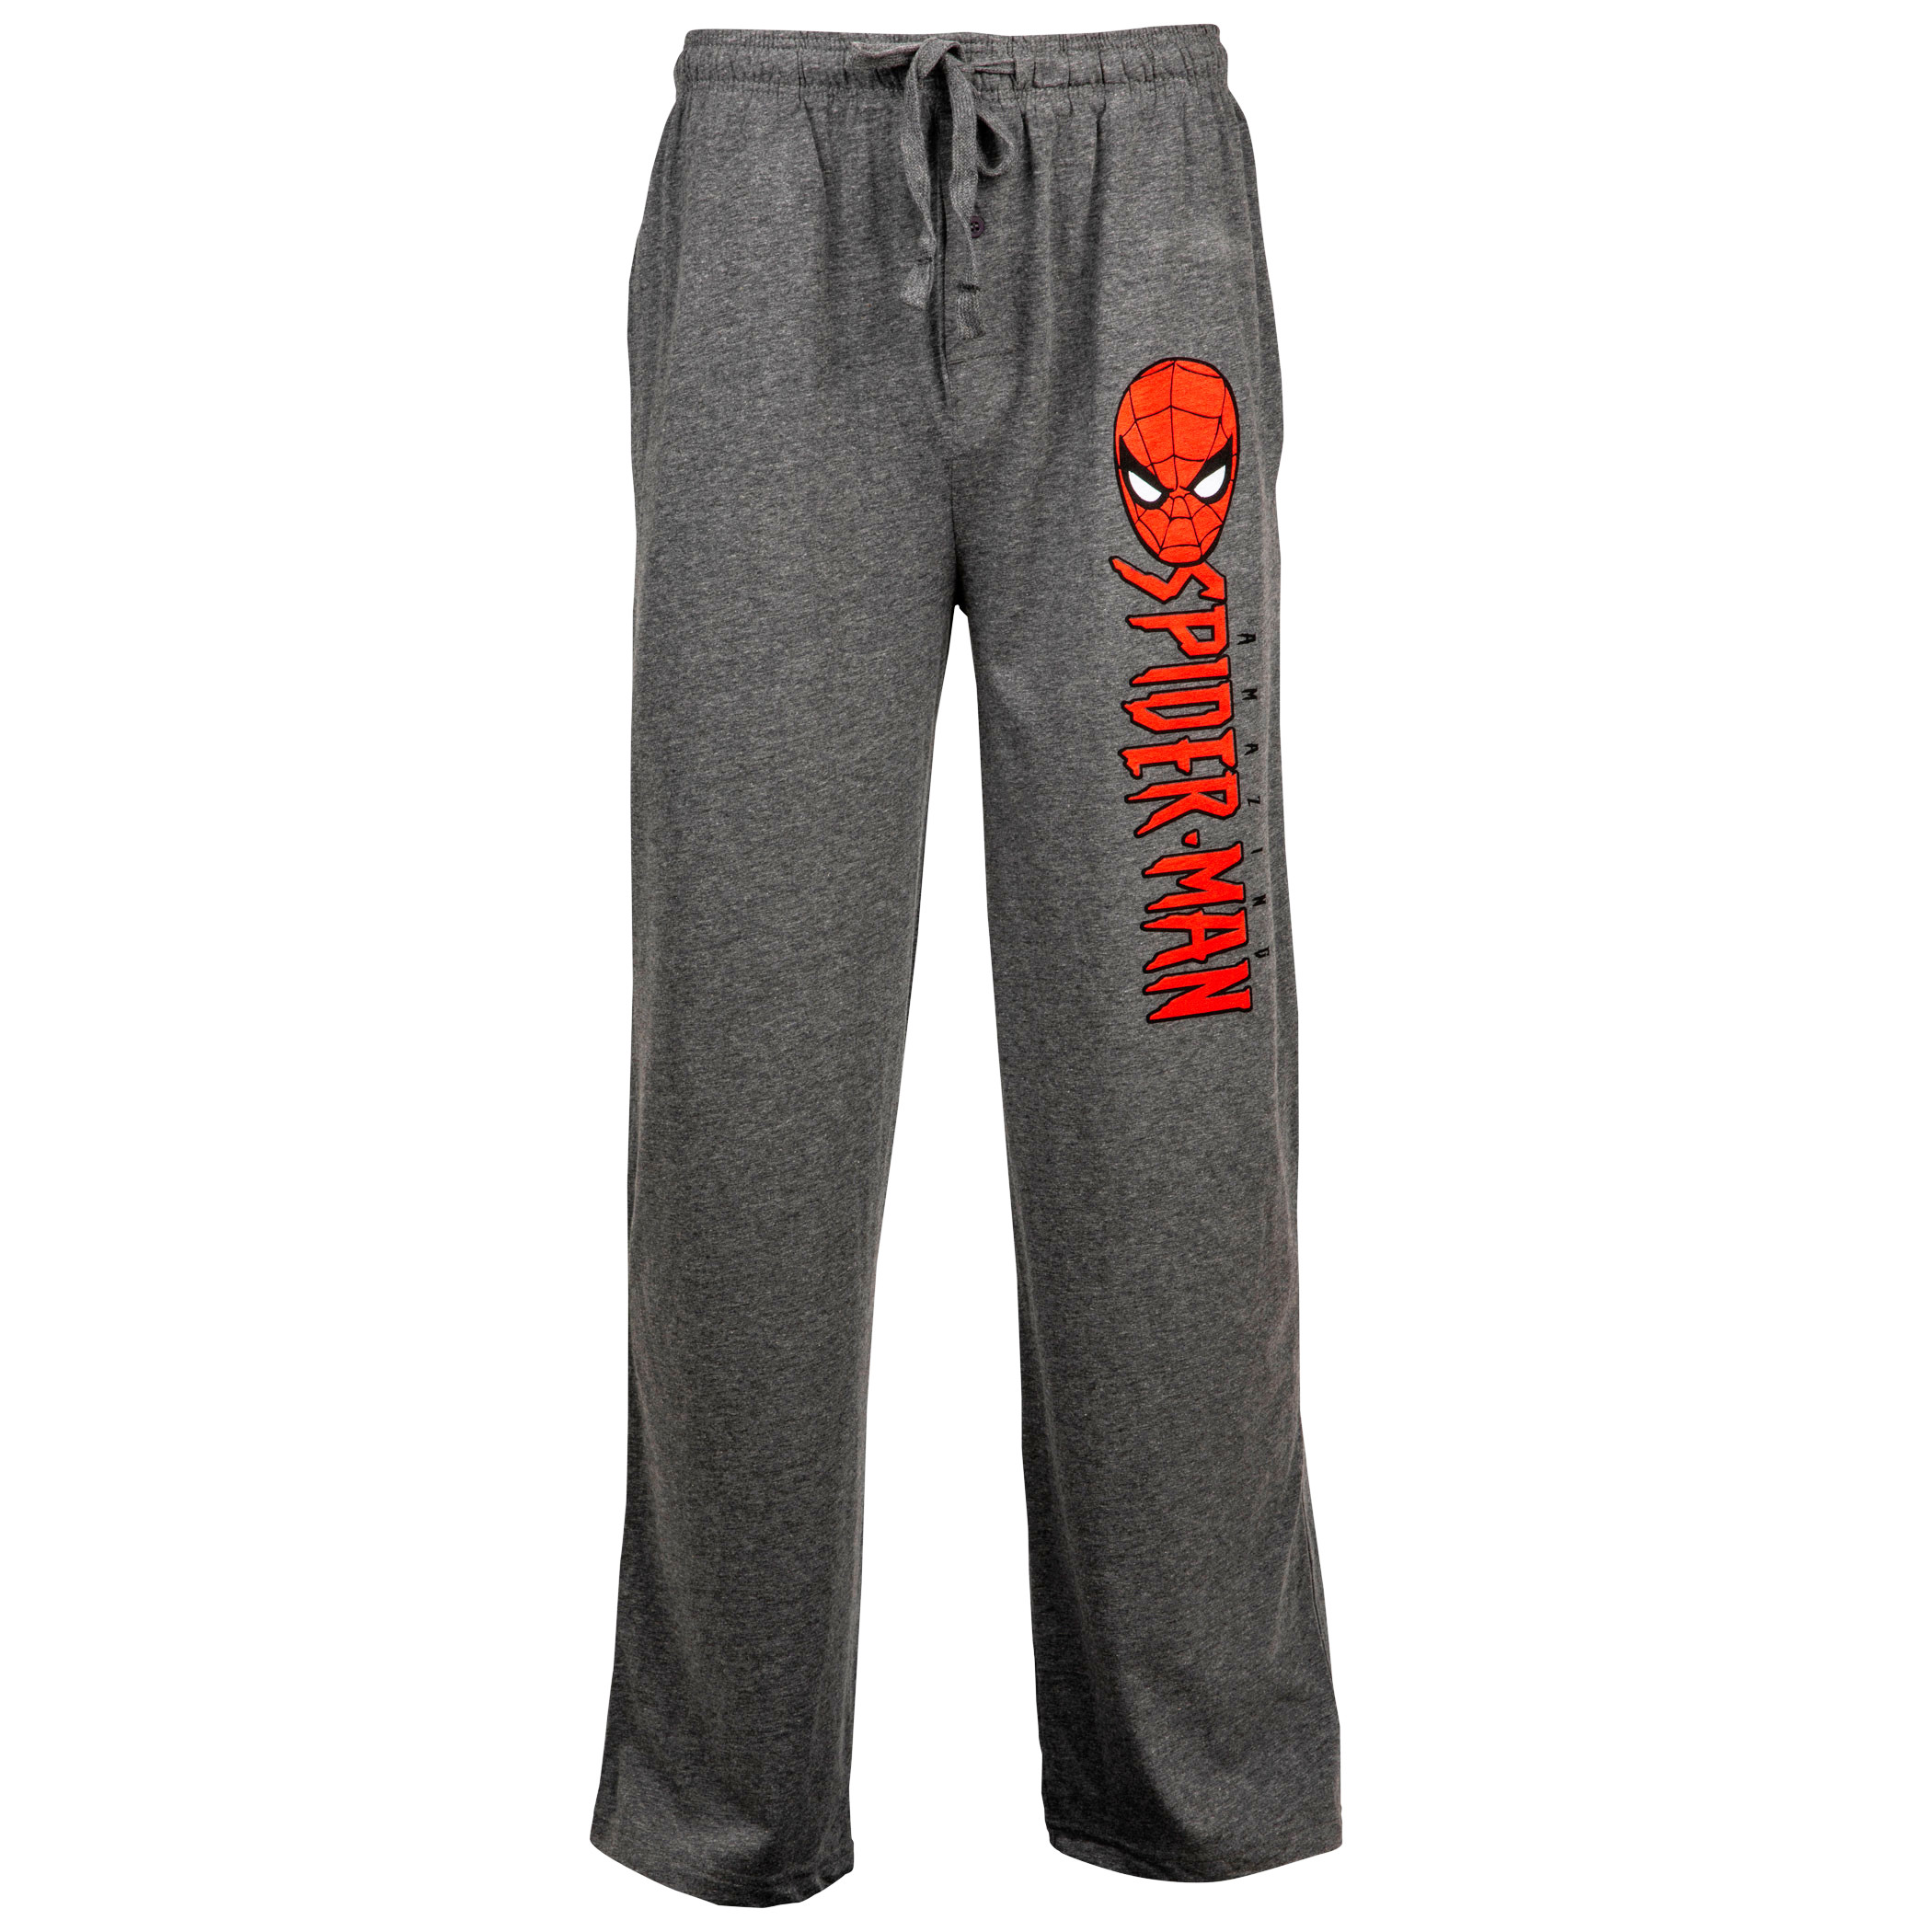 The Amazing Spider-Man Unisex Sleep Pants